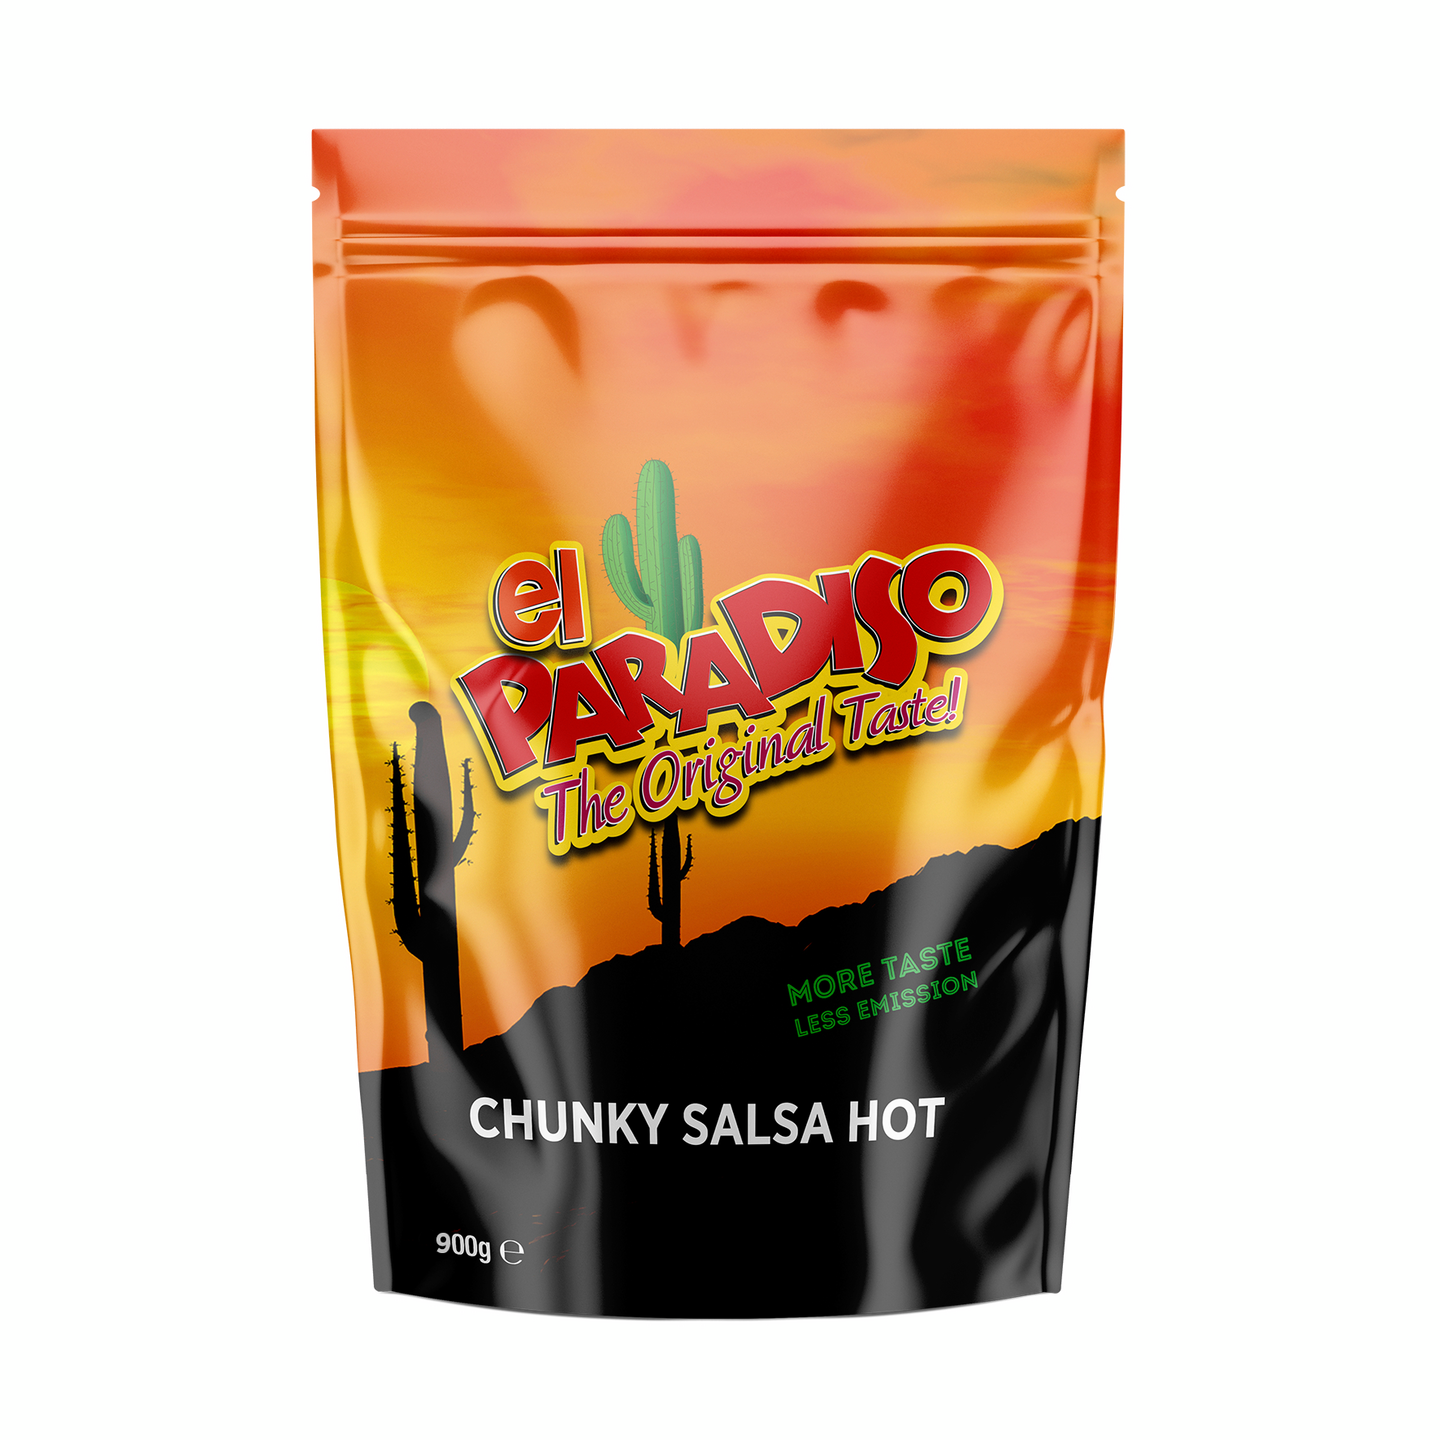 El Paradiso chunky salsa tulinen 900g